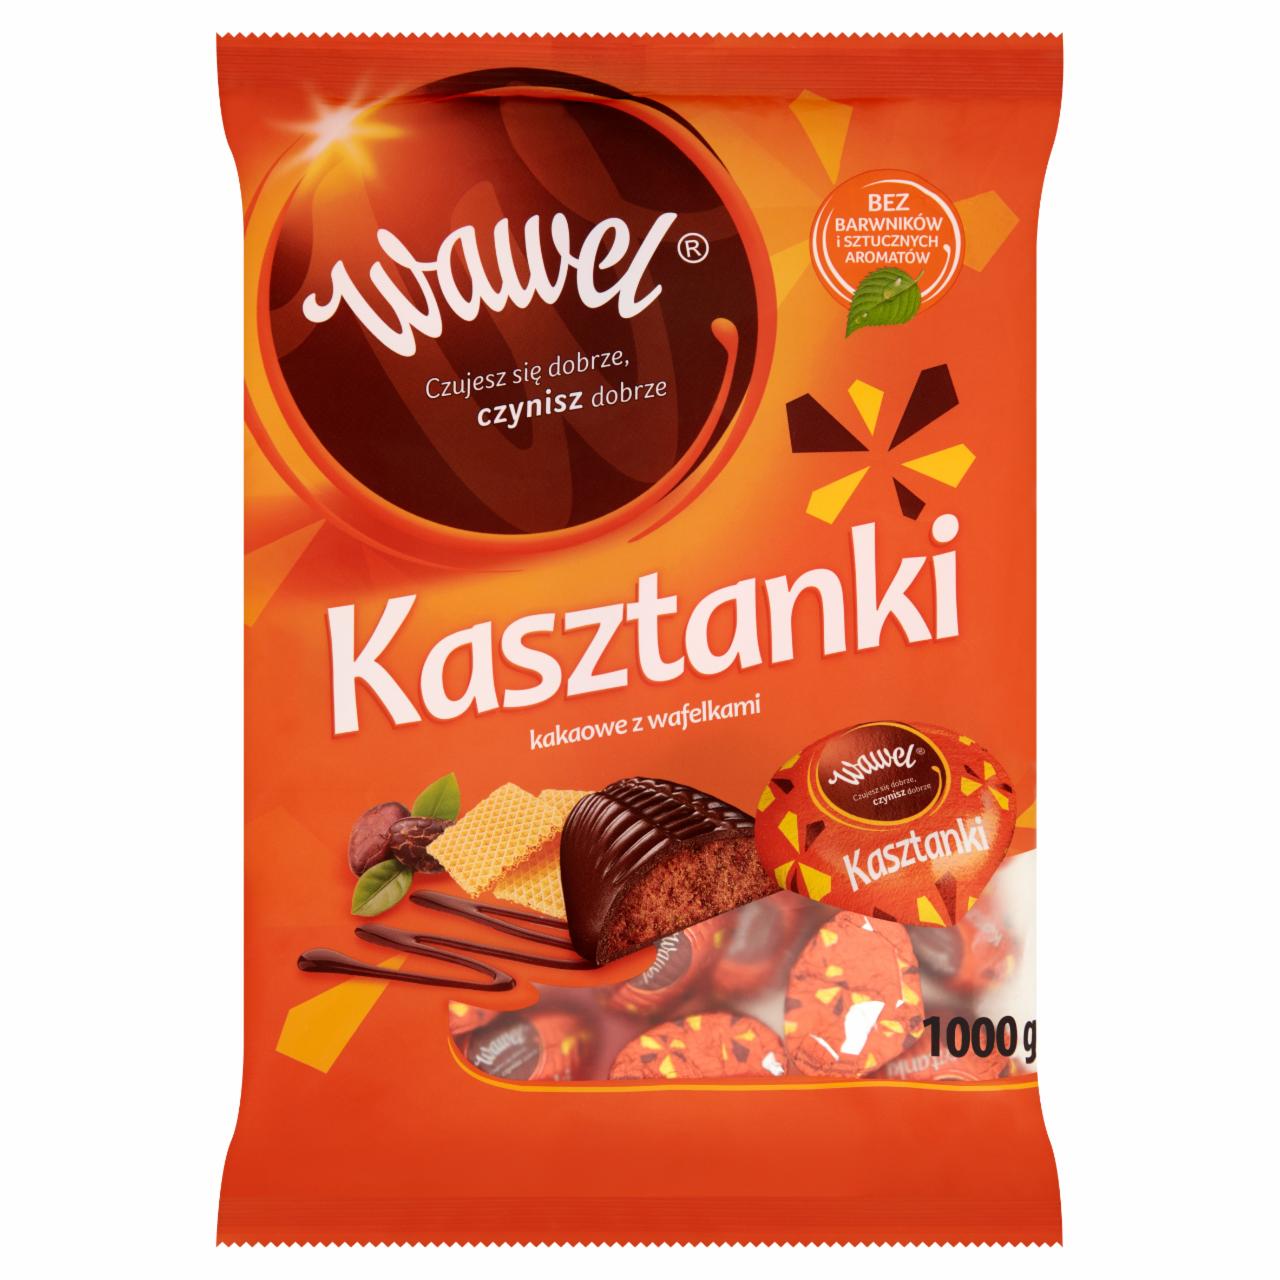 Photo - Wawel Kasztanki Cocoa with Wafers Filled Chocolates 1000 g